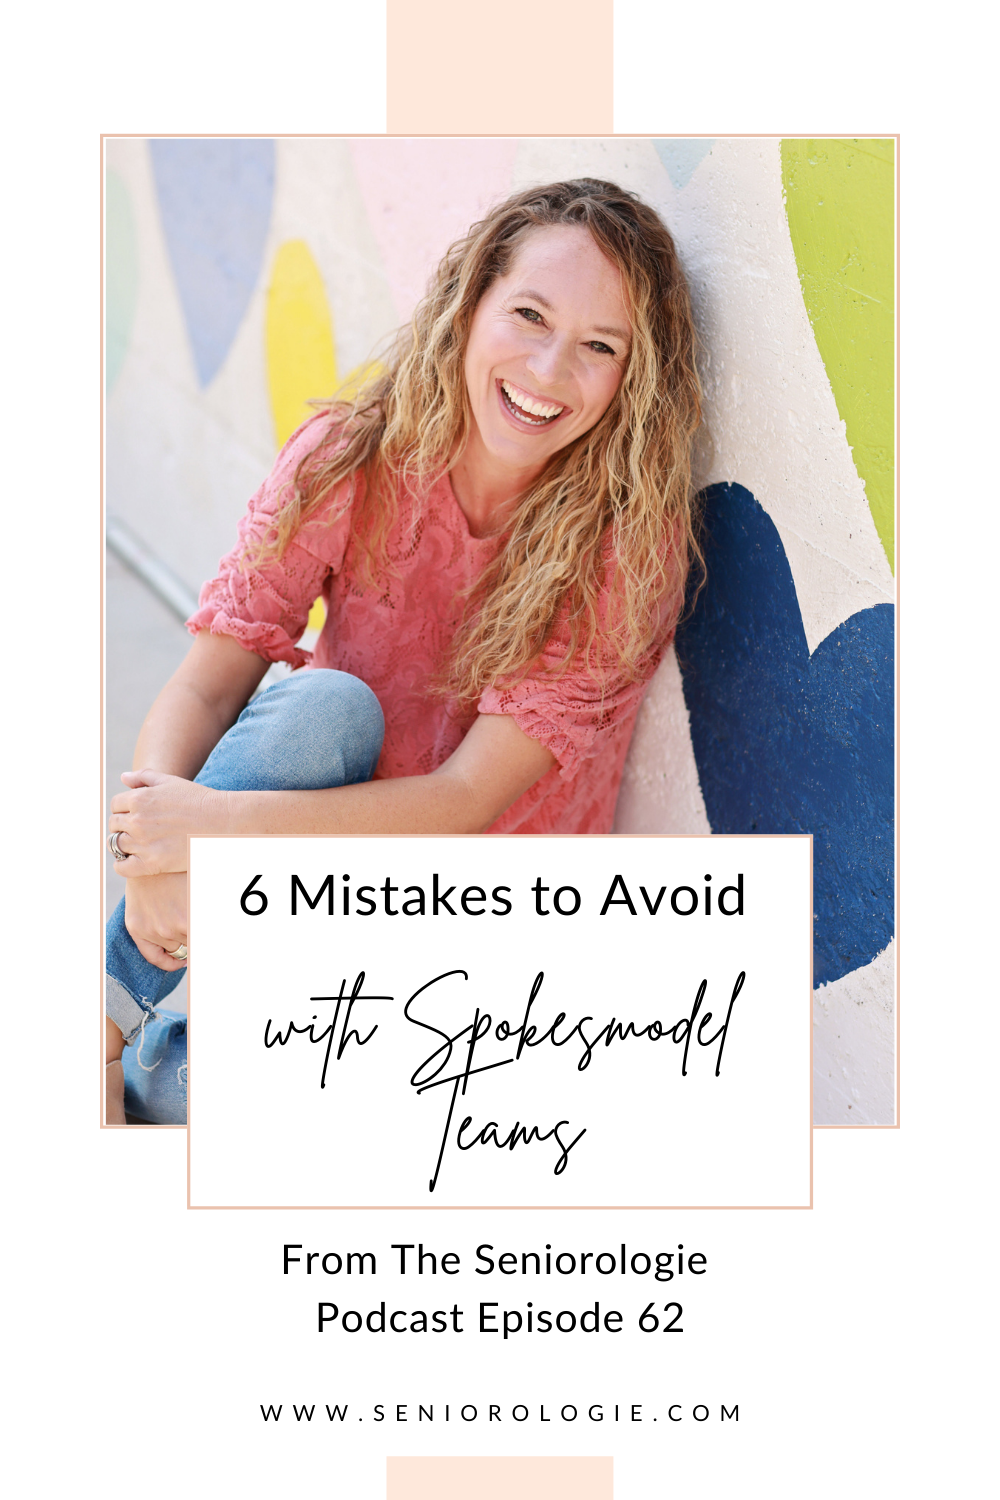 6 Mistakes to Avoid with Your Senior Spokesmodel Team: tips from senior portrait photography educator and Seniorologie podcast host Leslie Kerrigan